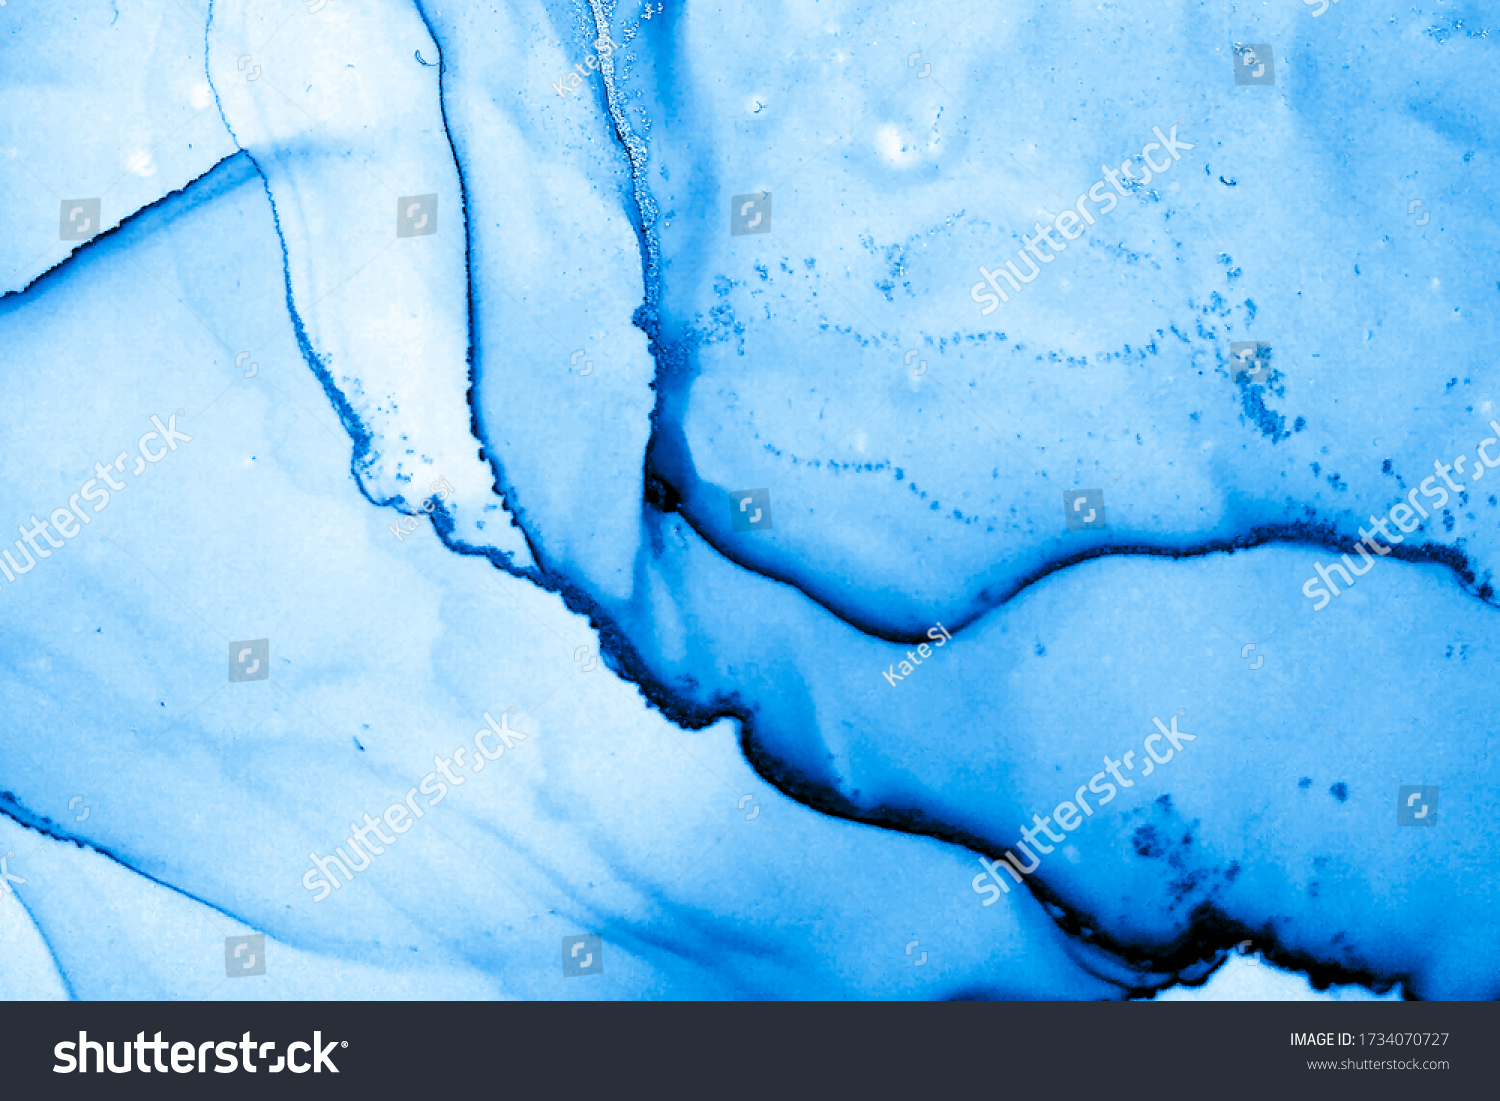 Cobalt-blue Images, Stock Photos & Vectors | Shutterstock